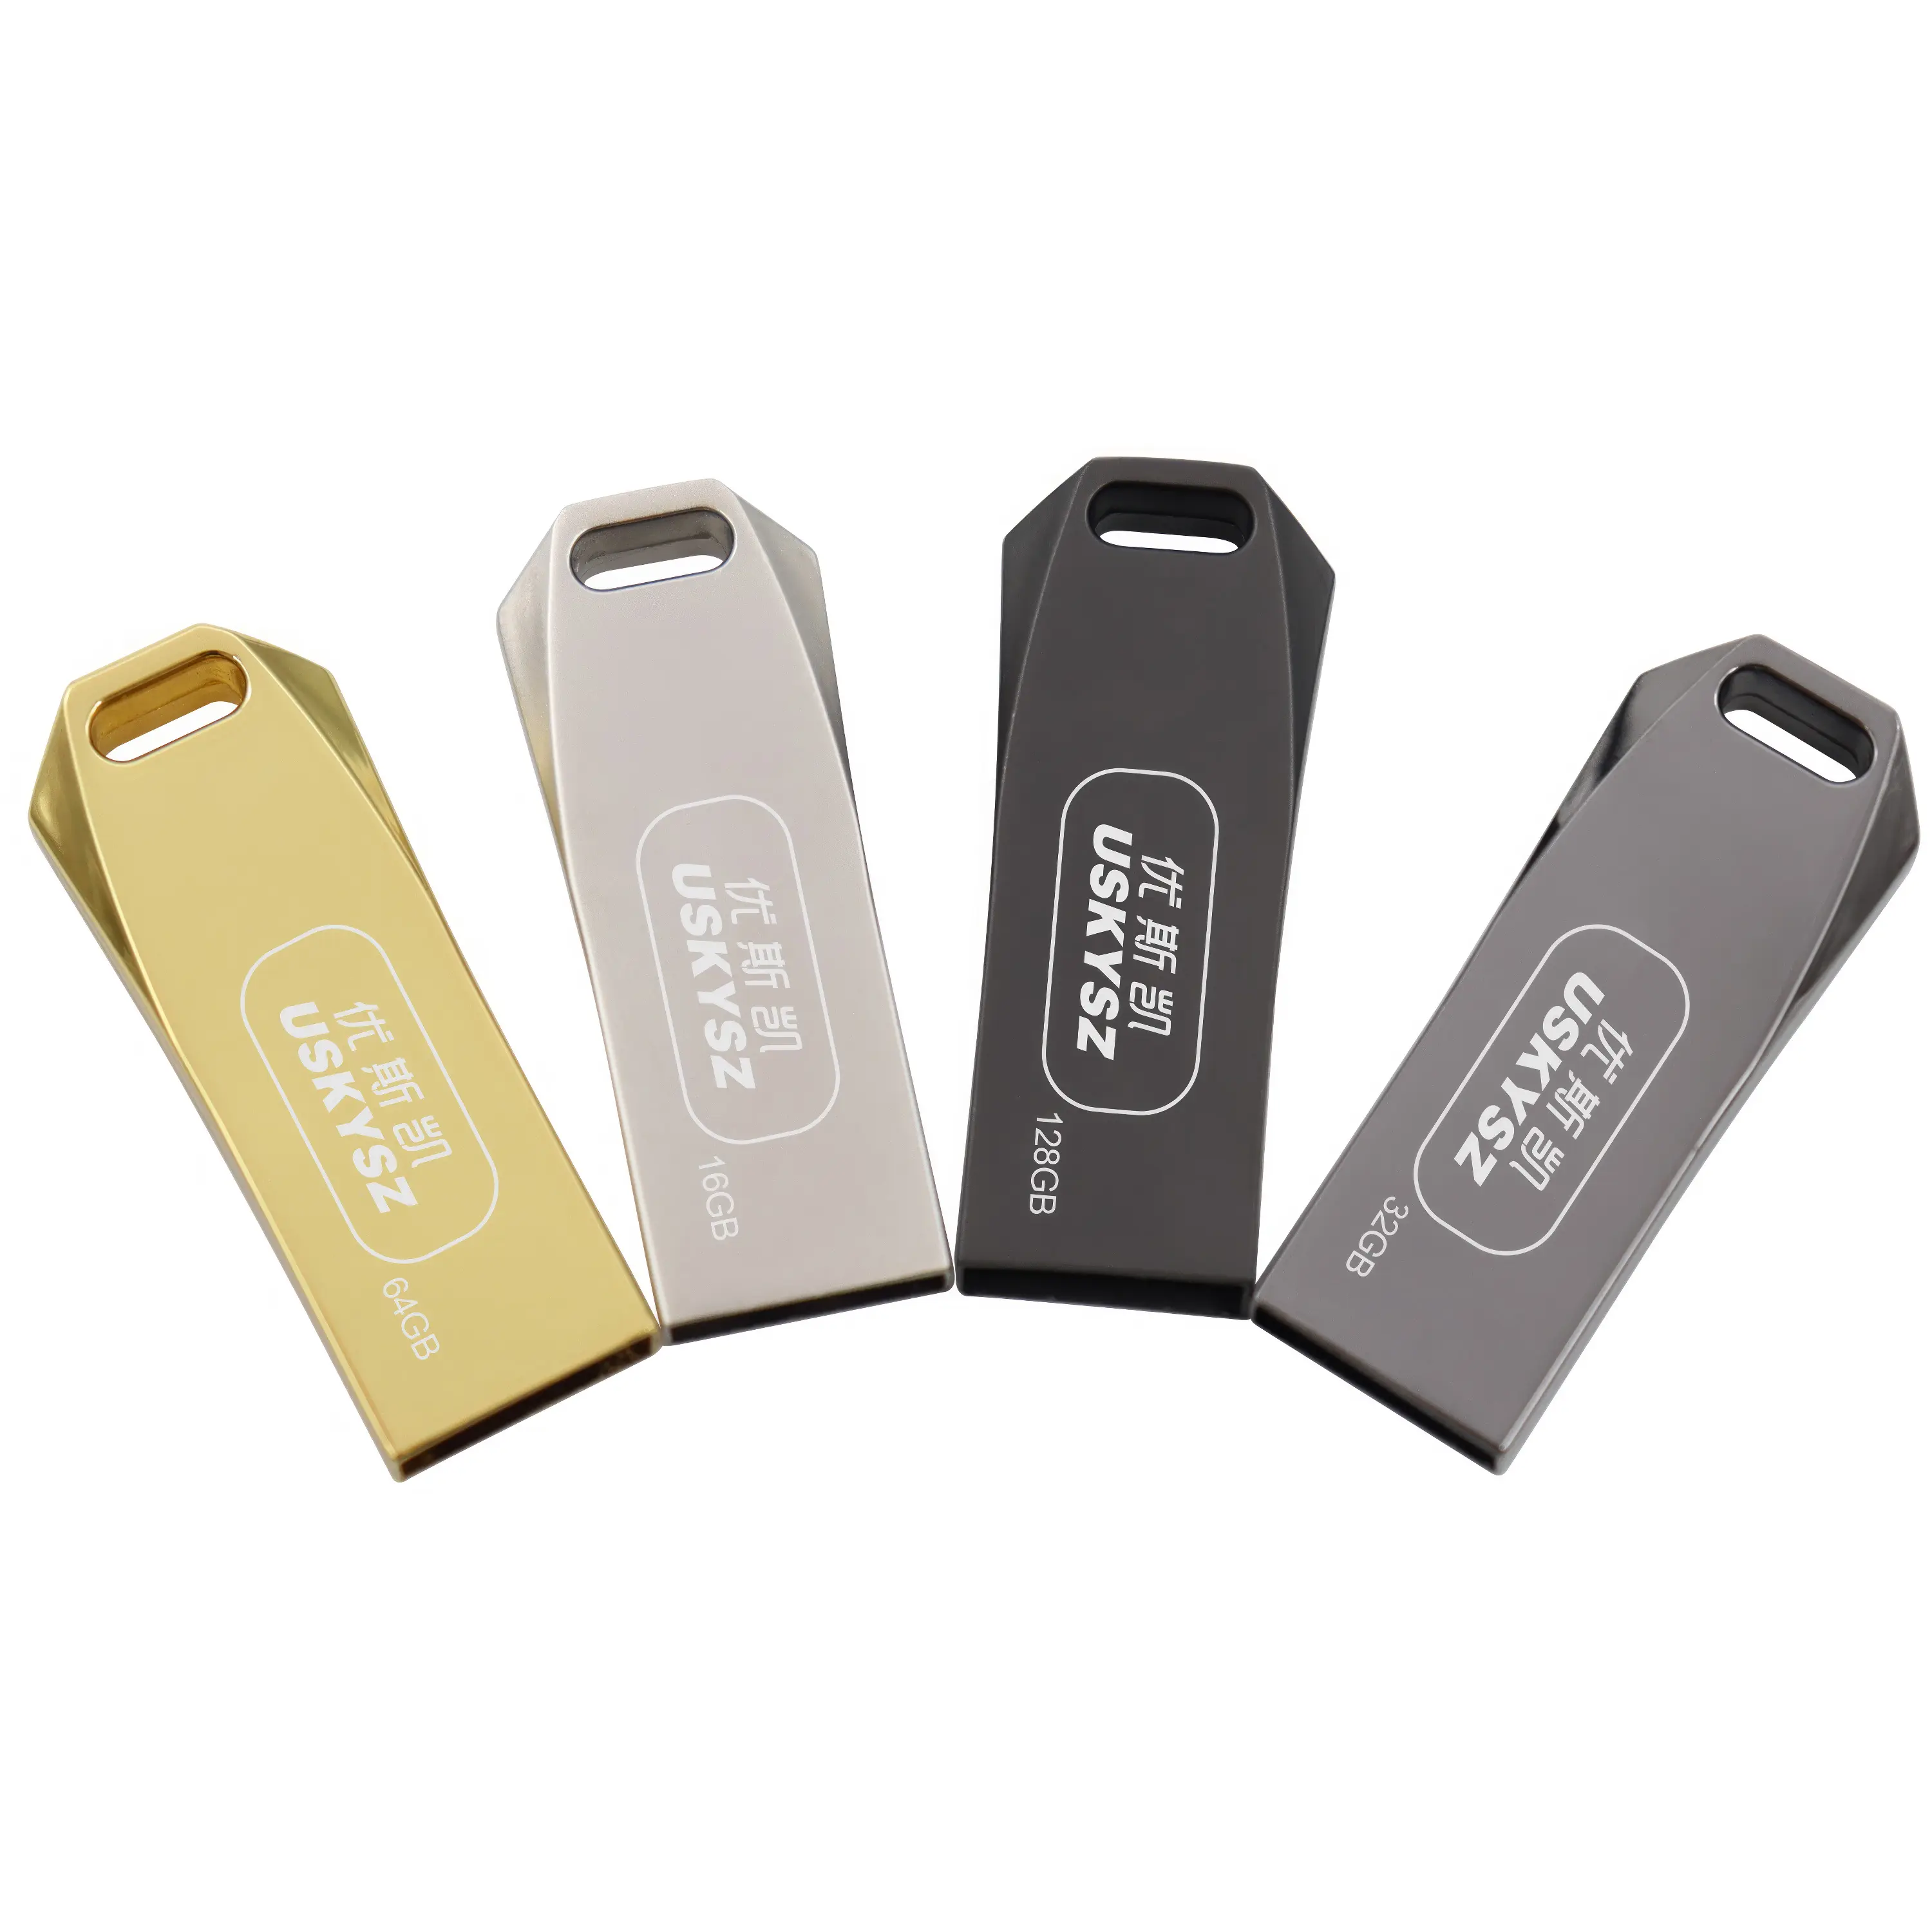 Stik memori portabel Mini logam, Flash Drive USB 3.0 USB 2.0, stik memori kecepatan tinggi, langsung dari pabrik